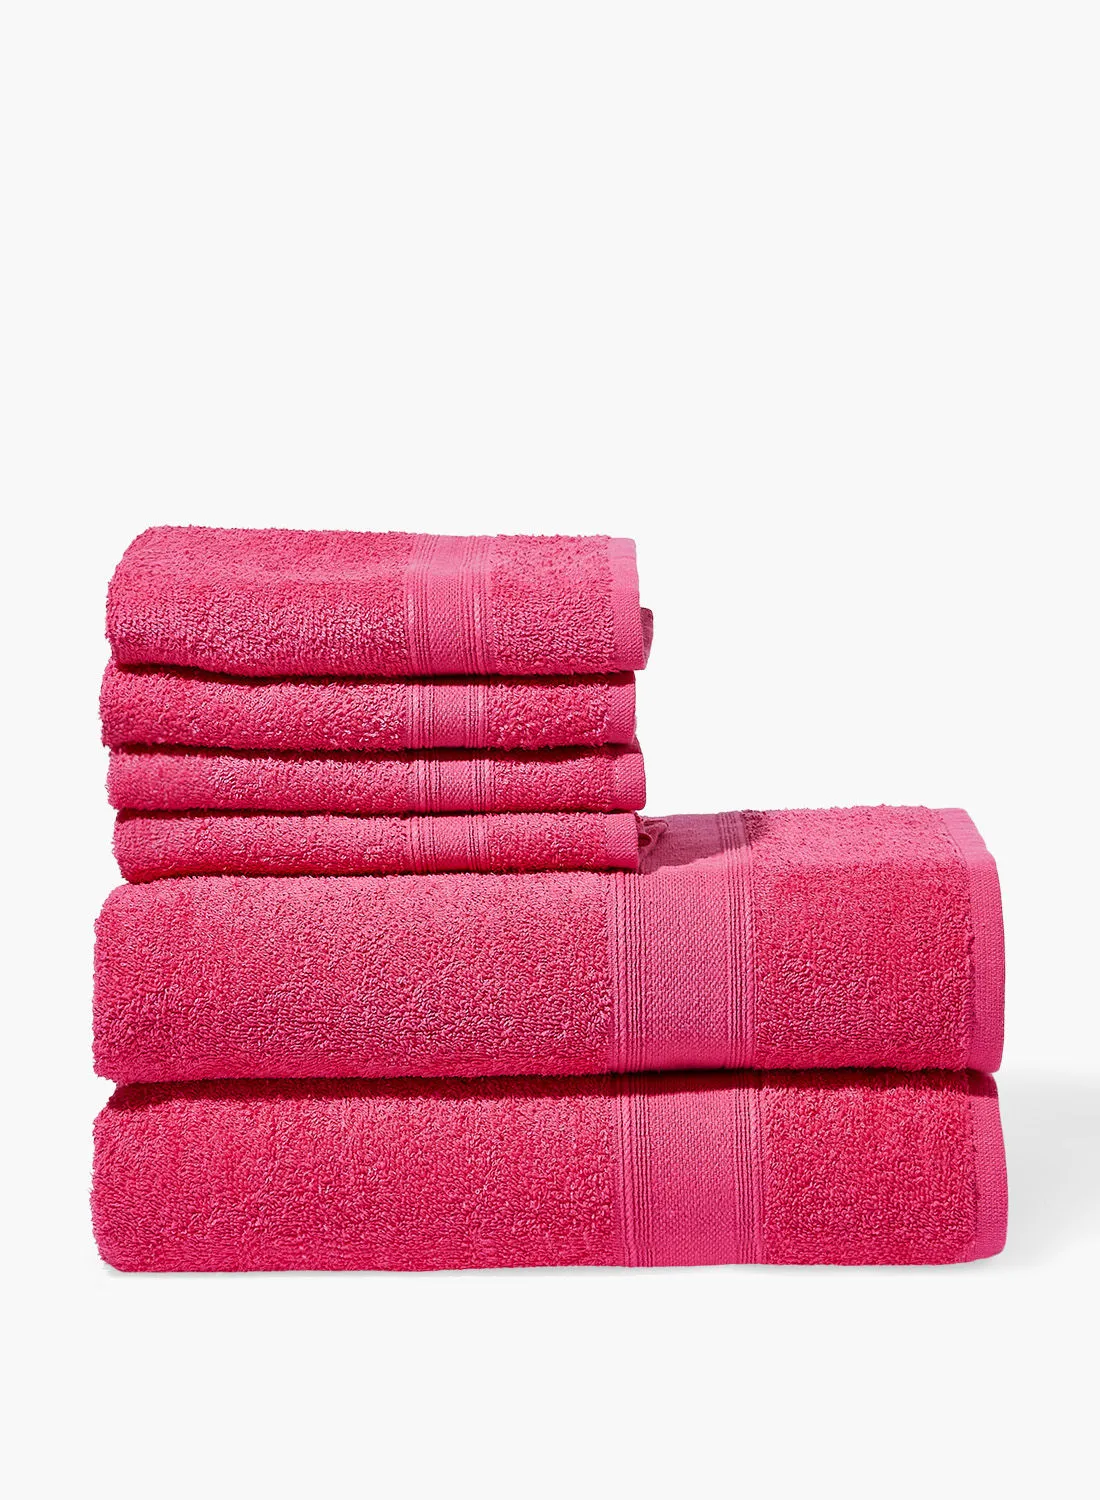 Amal 6 Piece Bathroom Towel Set - 400 GSM 100% Cotton Terry - 4 Hand Towel - 2 Bath Towel - Fuchsia Color -Quick Dry - Super Absorbent